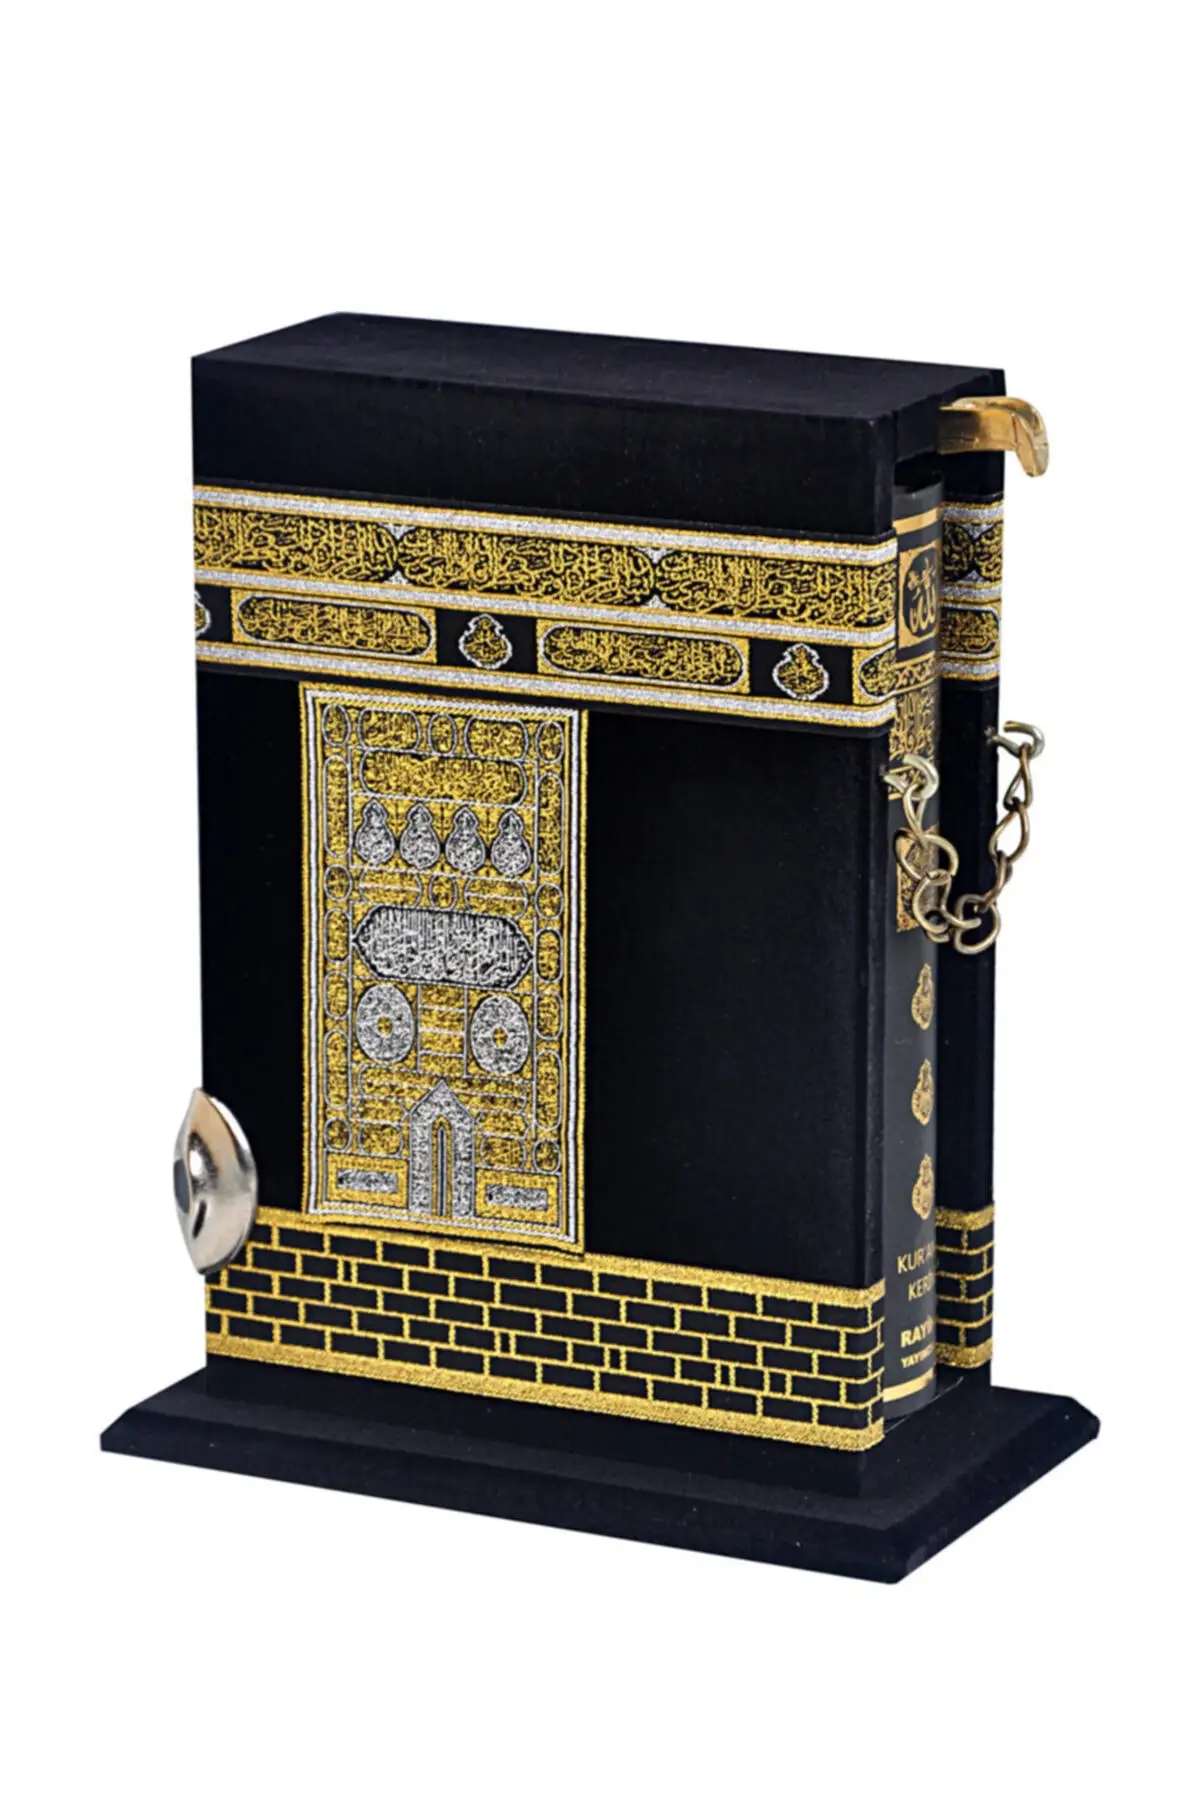 kaaba-patterned-boxed-projecan-the-holy-projecan-medium-islamic-spiritual-plefor-emilfull-arabic-letter-religious-ramadan